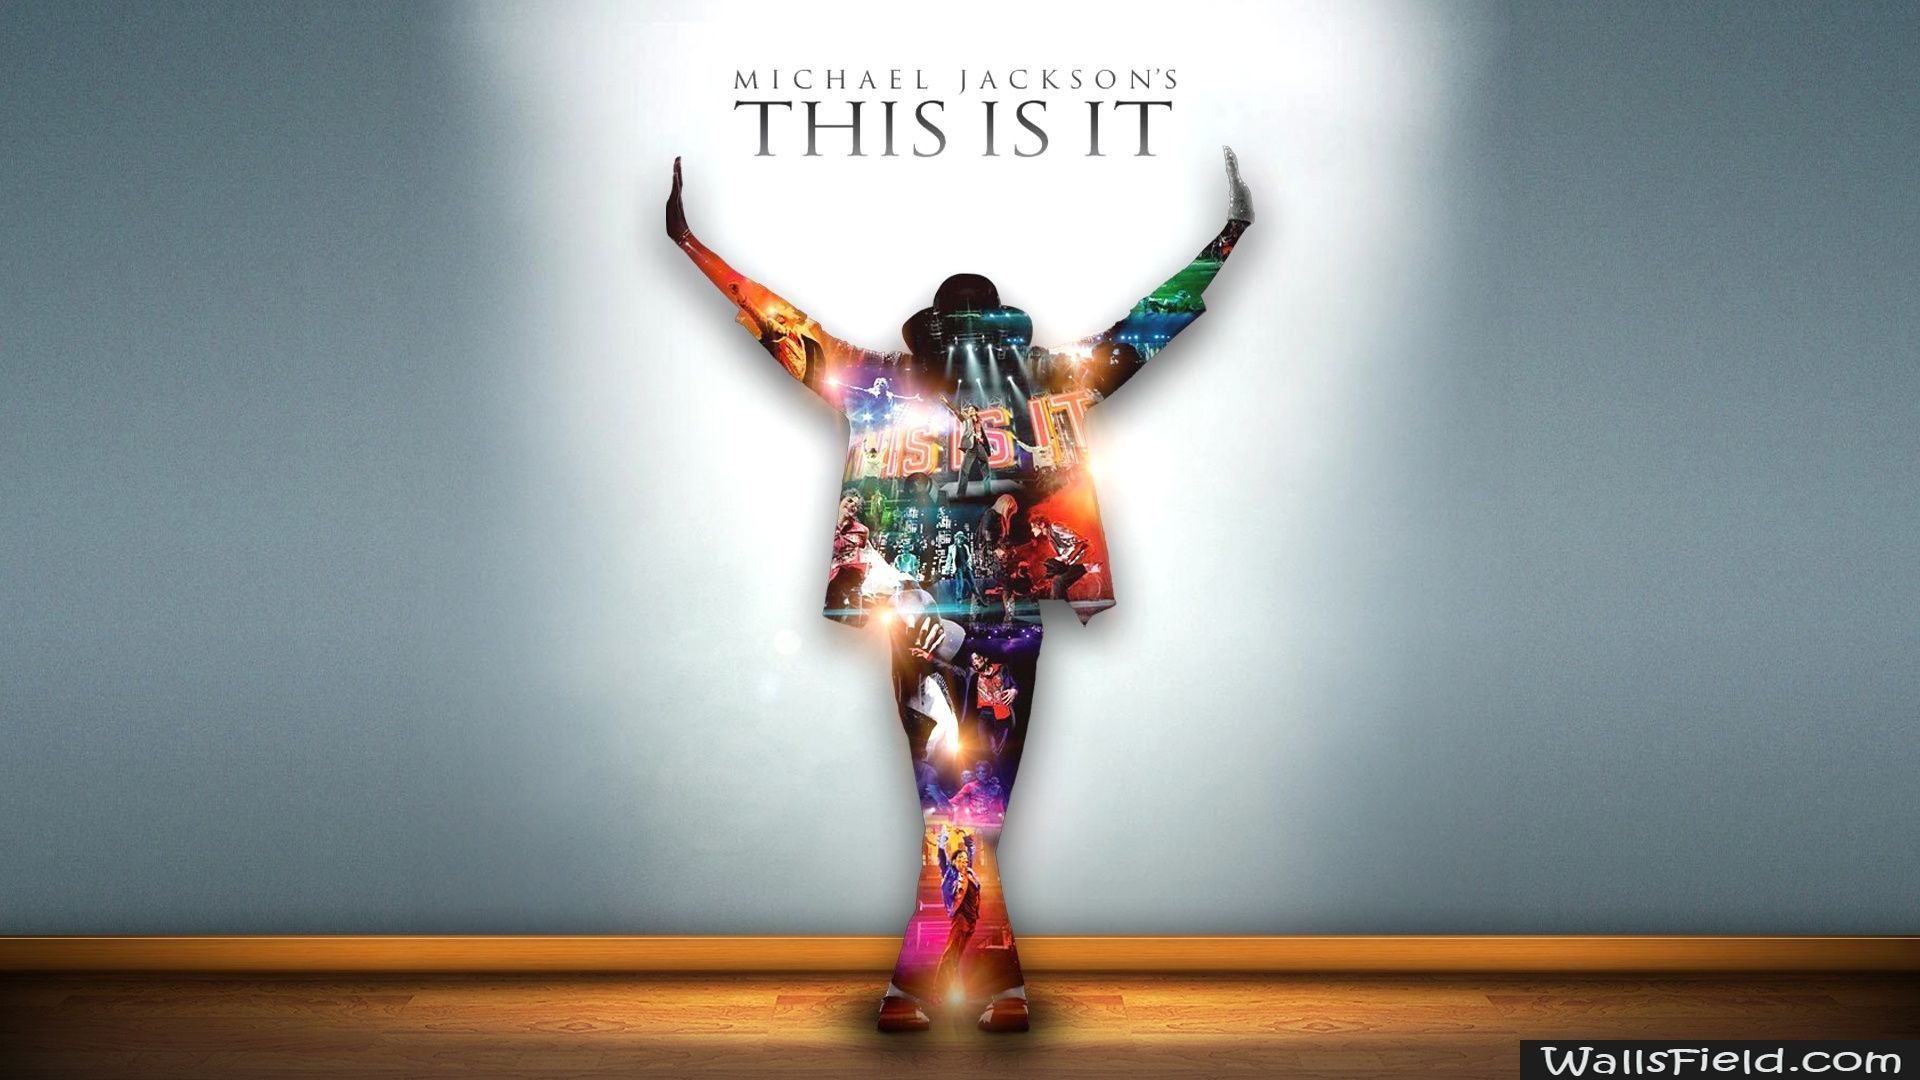 Michael Jackson's This is It.com. Free HD Wallpaper. Michael jackson wallpaper, Michael jackson album covers, Michael jackson